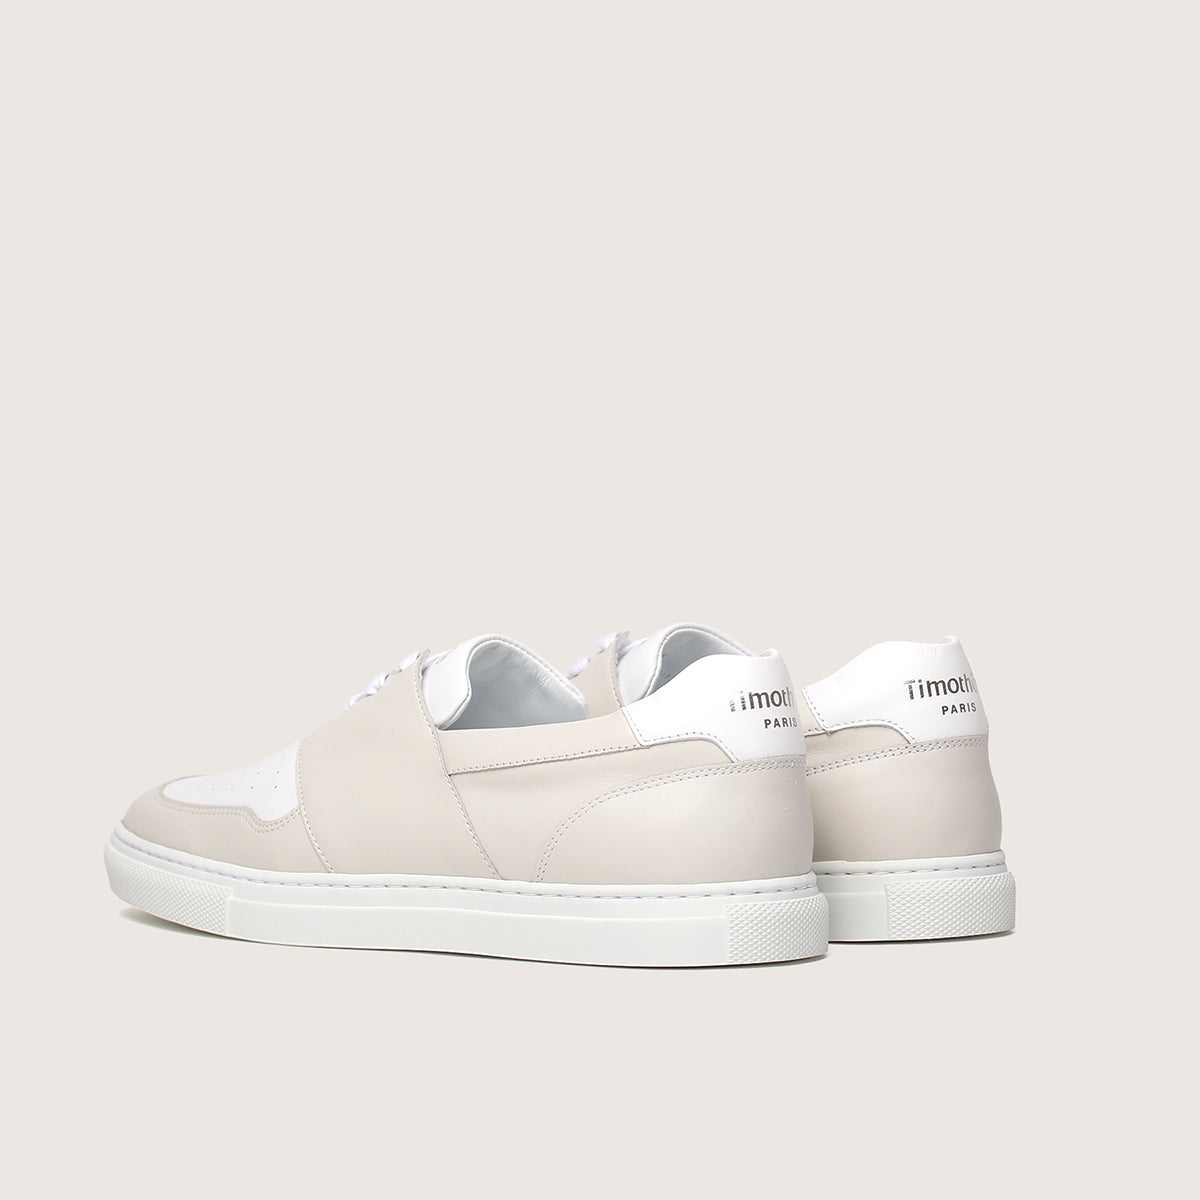 Timothée Paris PYLA Vanilla White Leather Sneakers